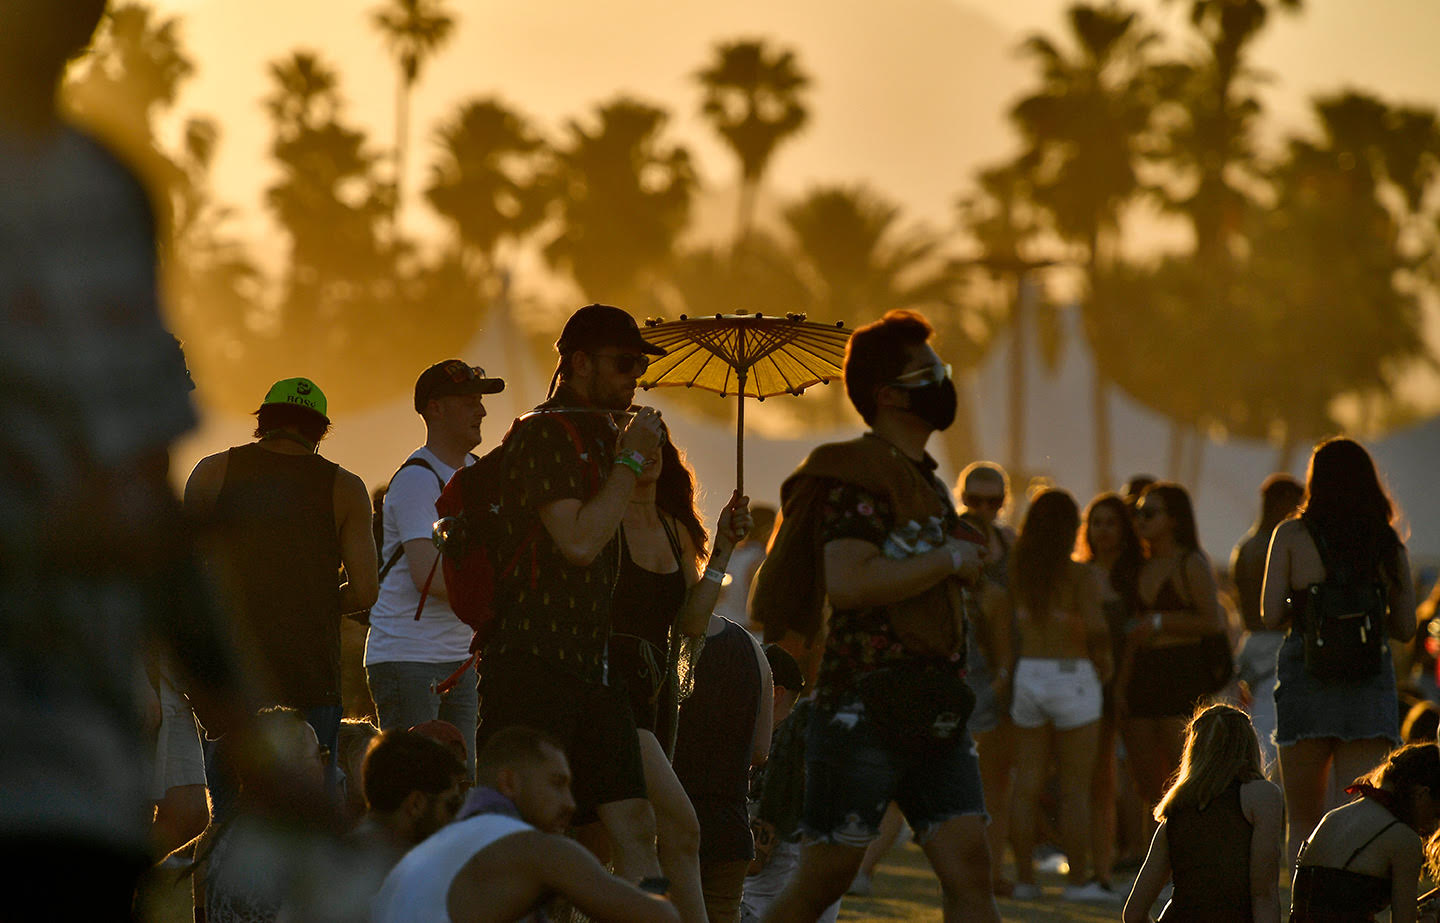 Coachella Weekend 2: Fleeting Moments In Brazen Heat